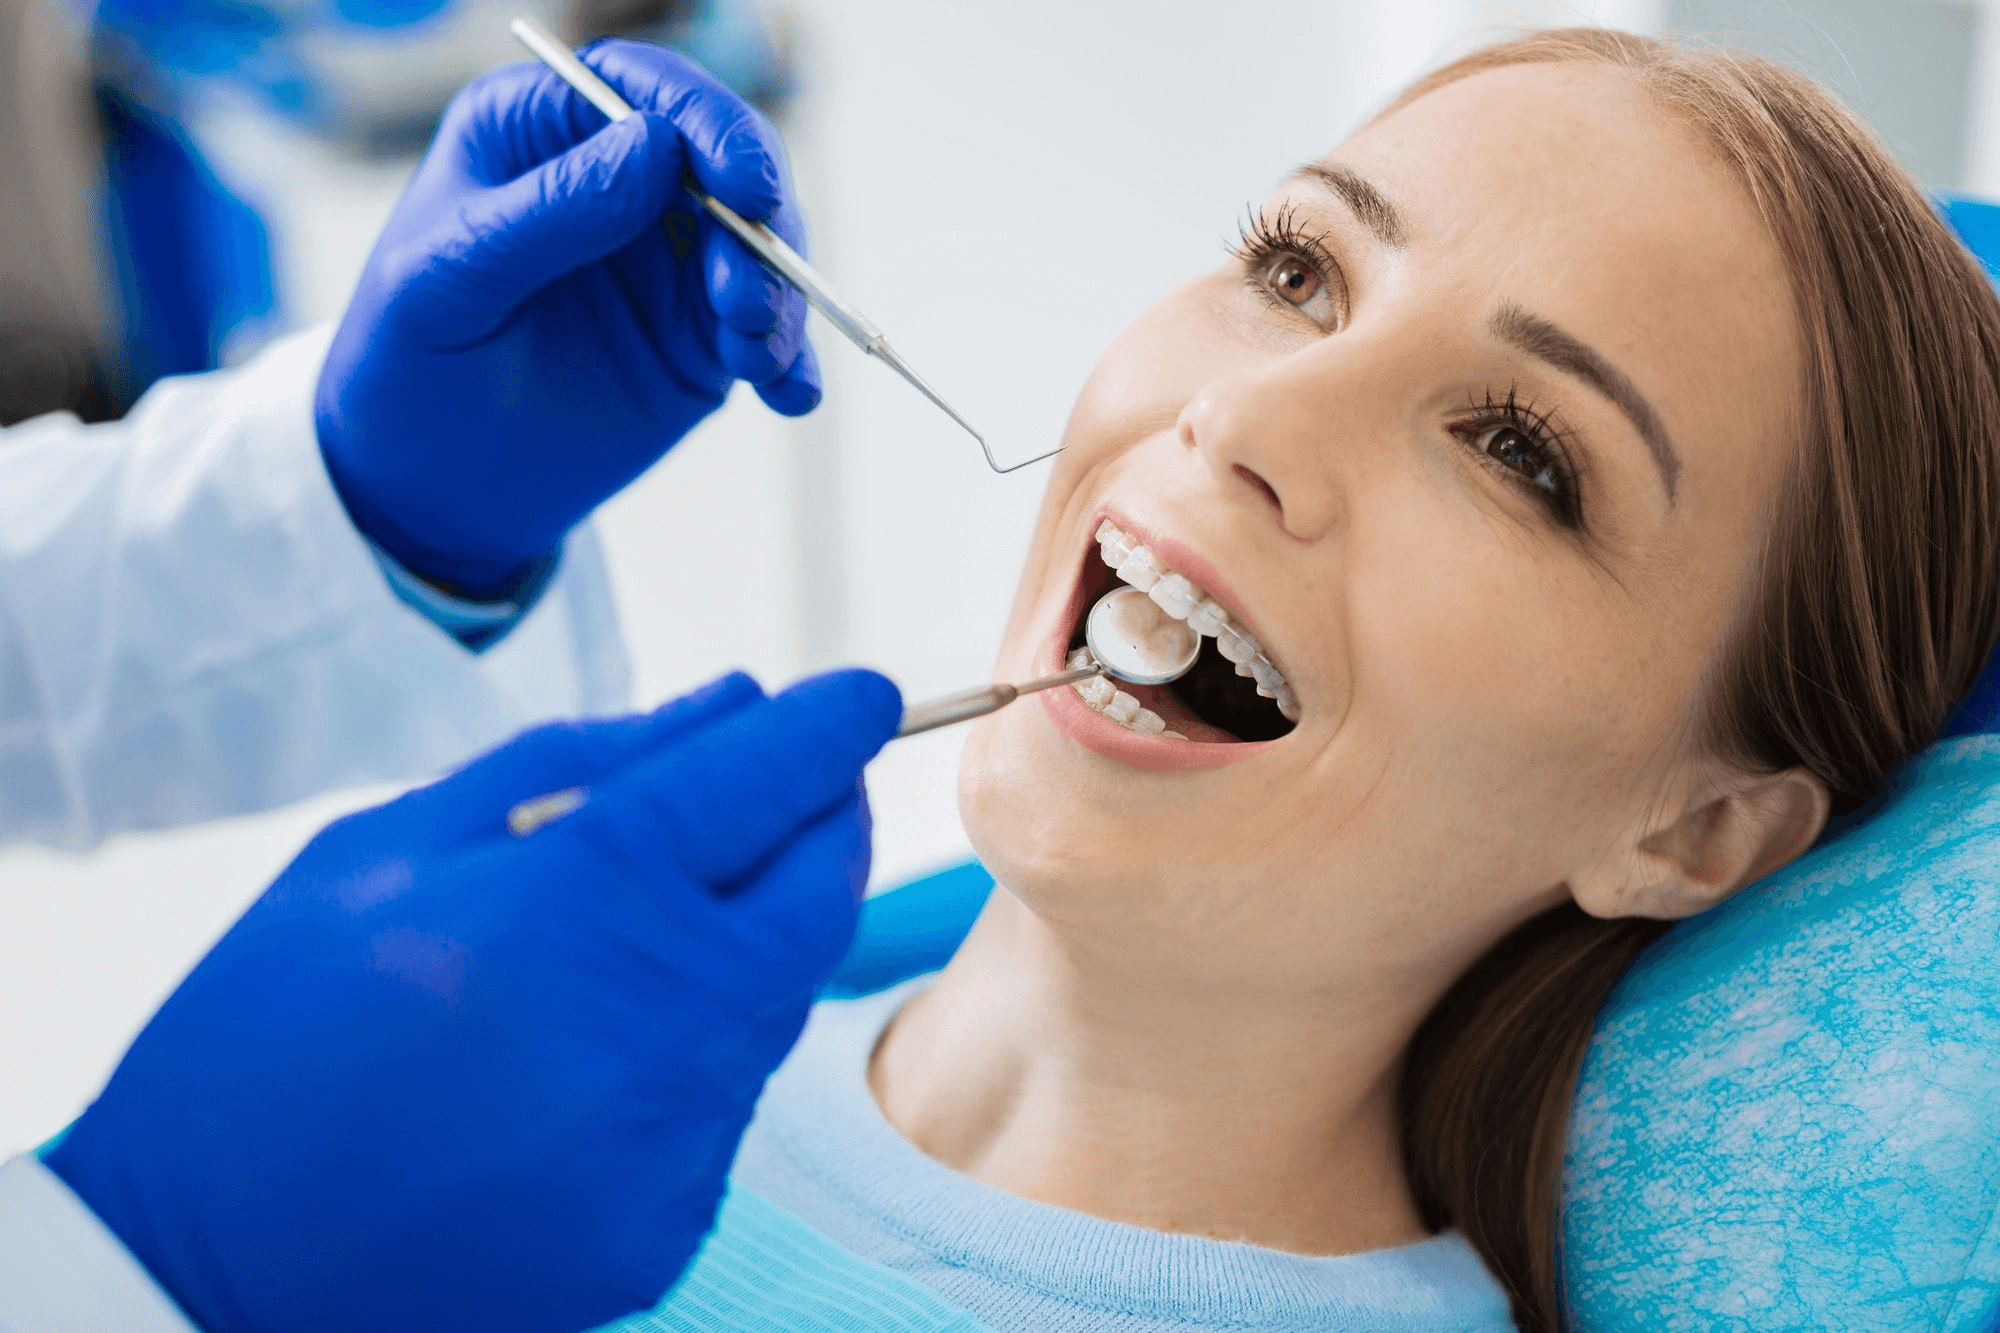 Dentist Examining Patients Teeth